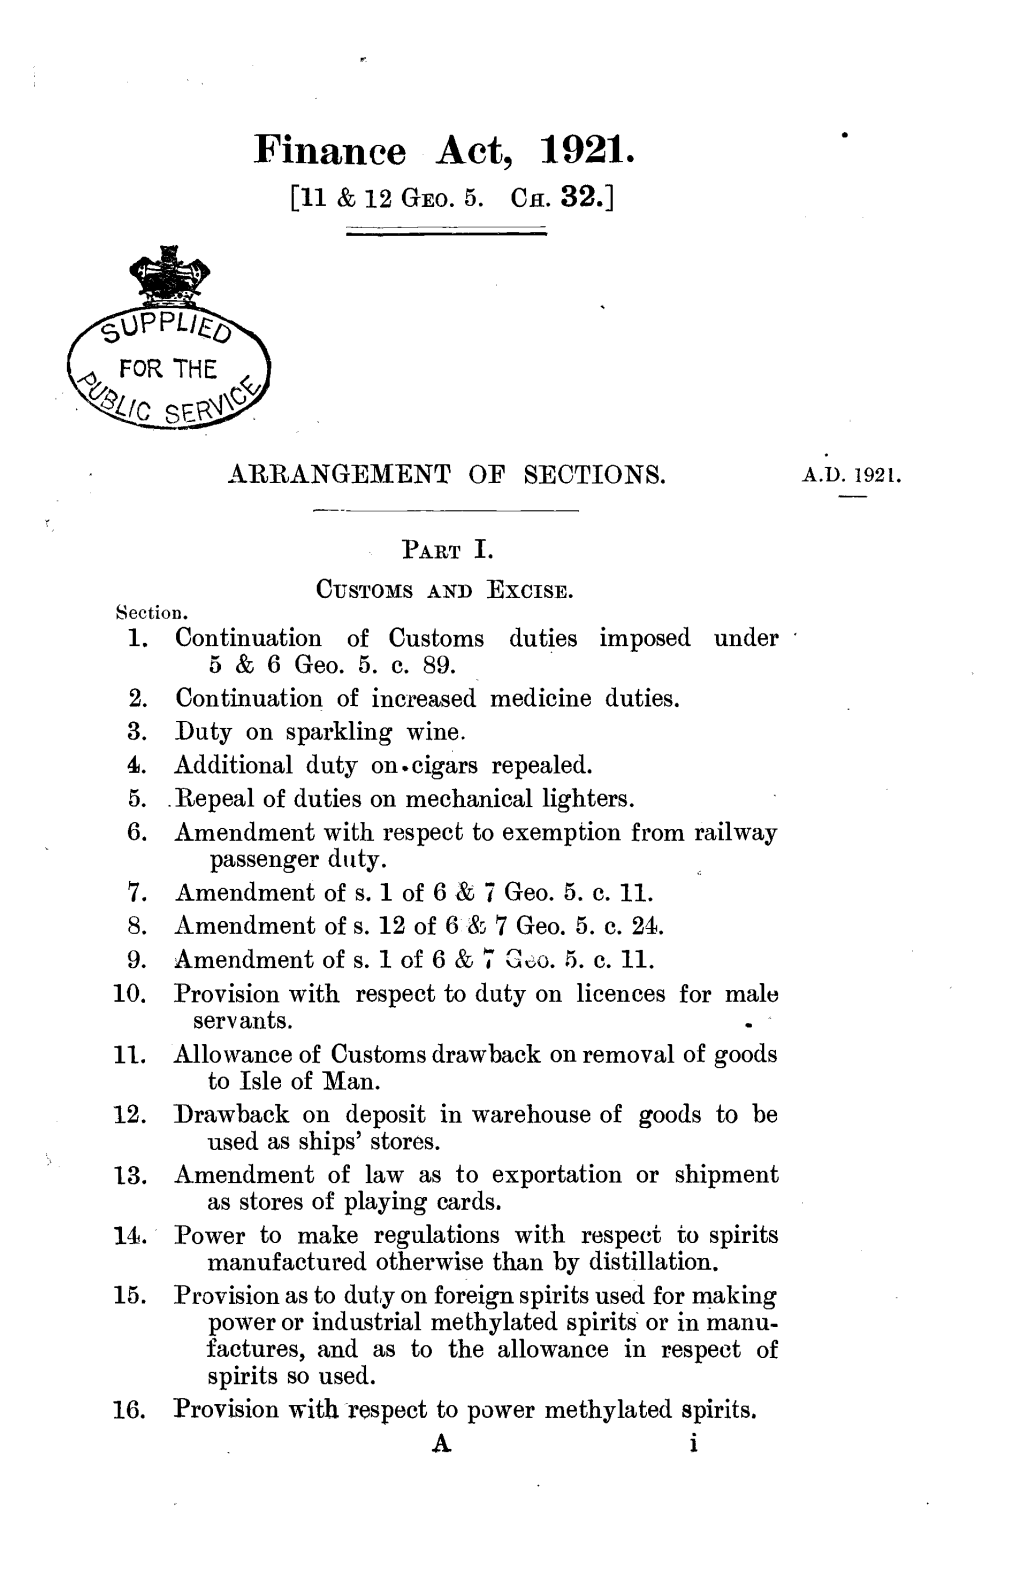 Finance Act, 1921. [11 & 12 GEO